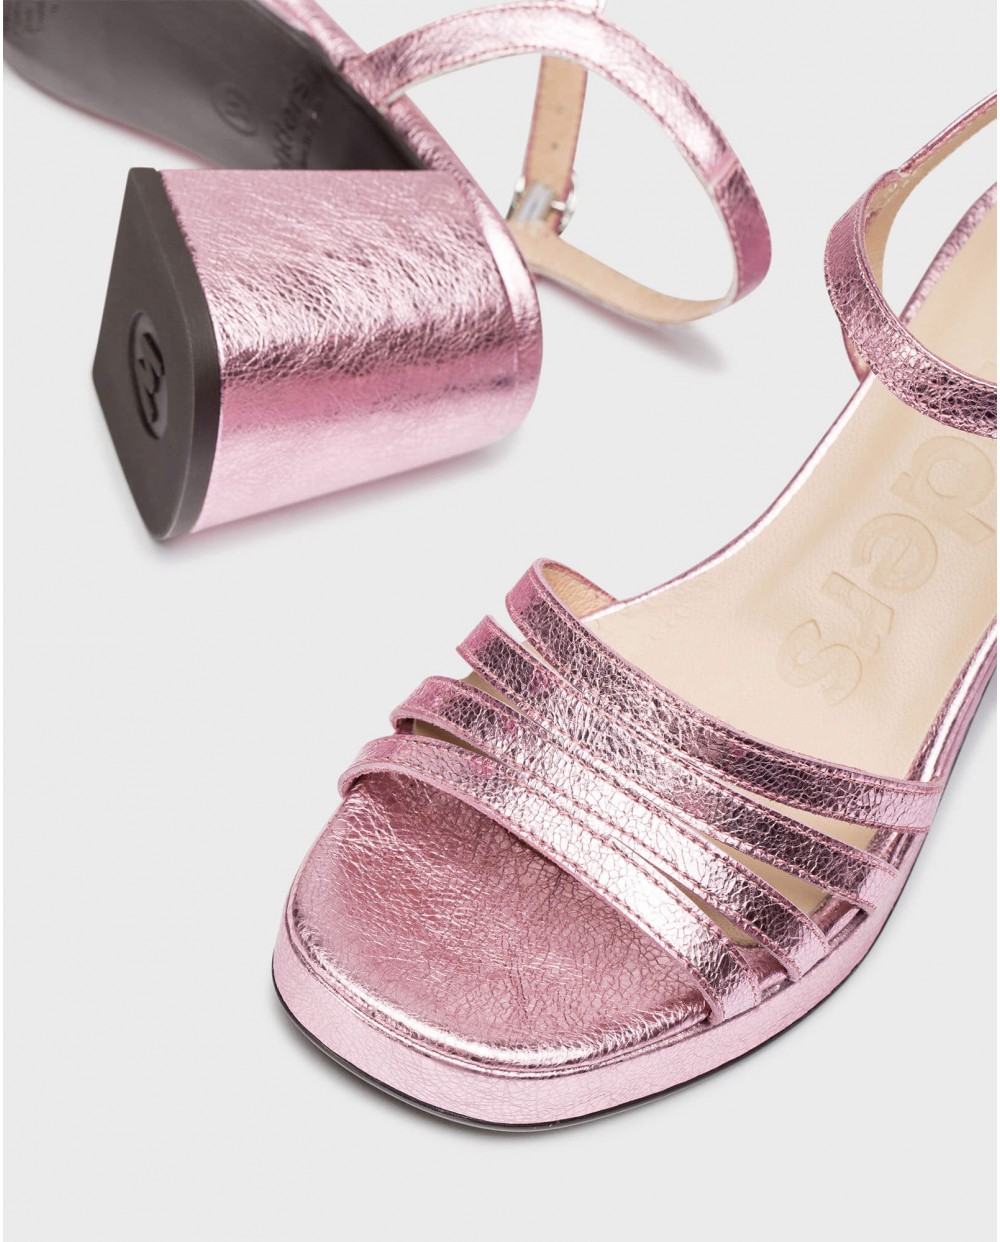 Pink Zaida heeled sandals